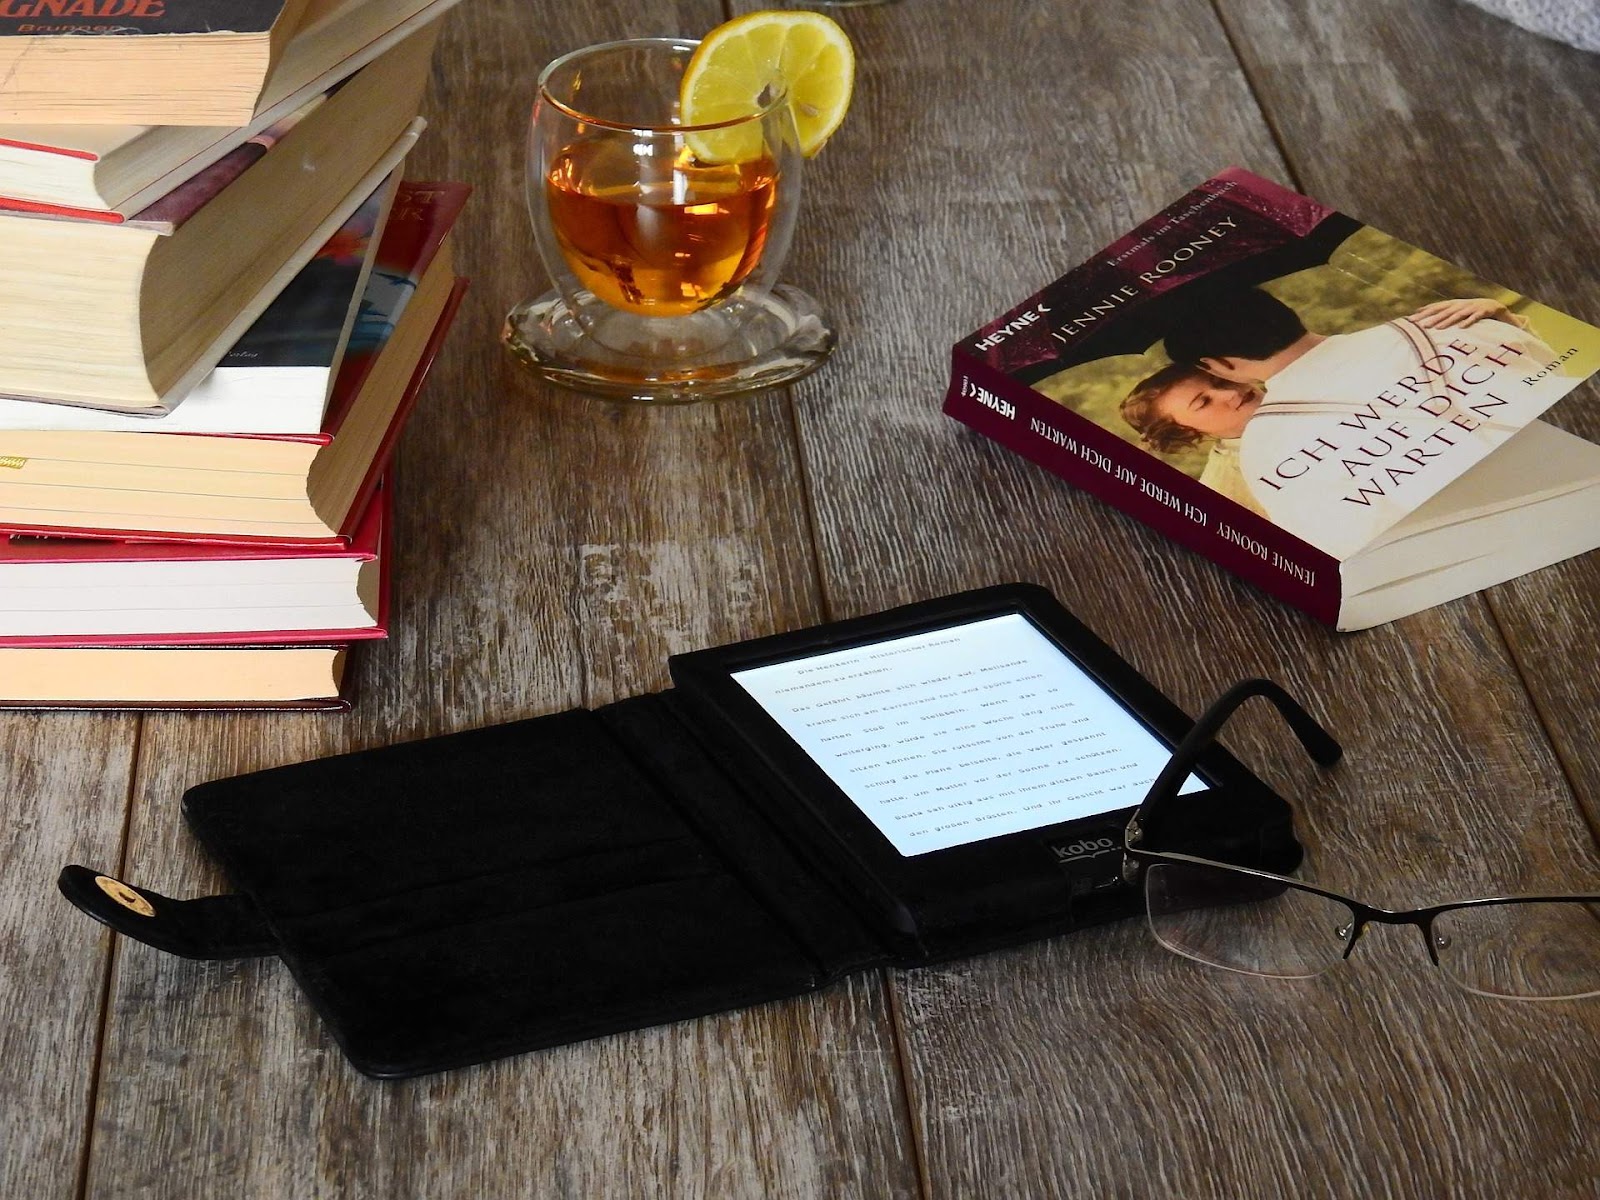 Kobo ebook reader on a table